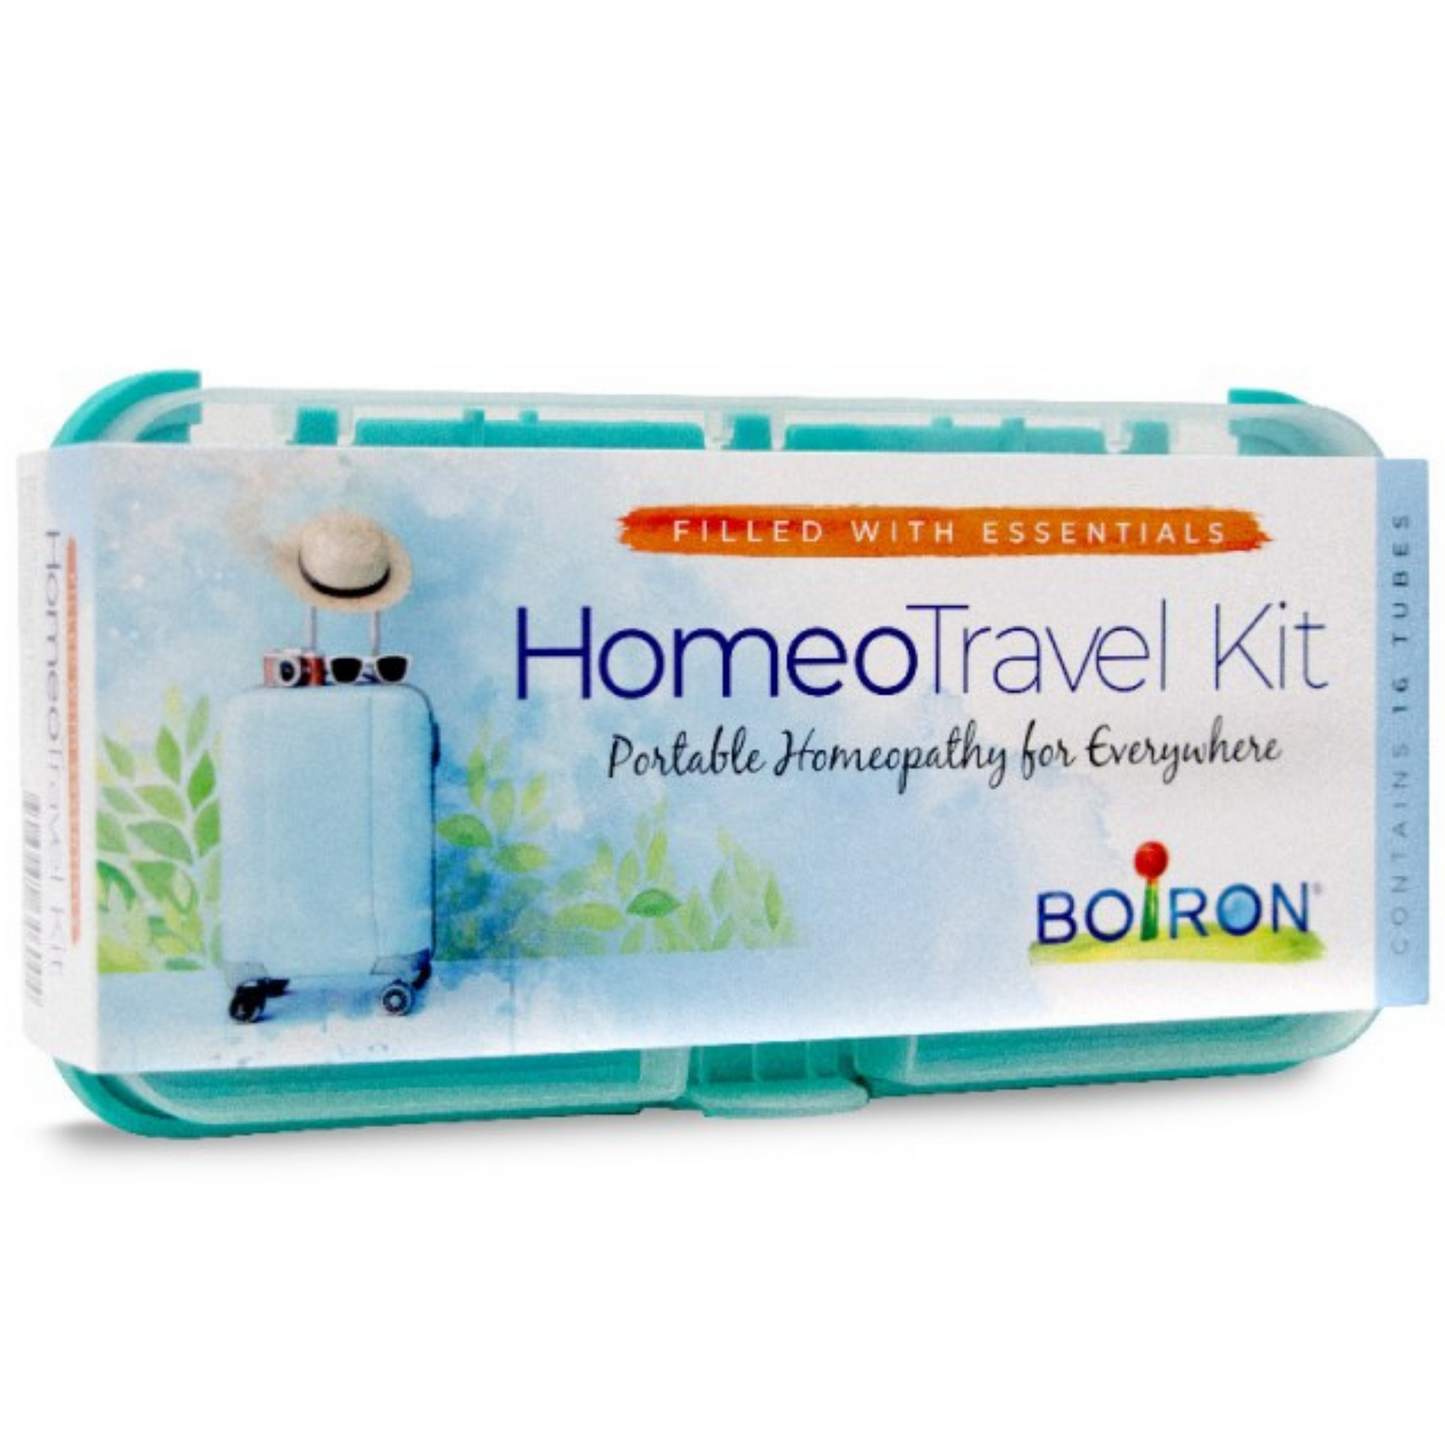 Primary Image of Homeotravel Kit